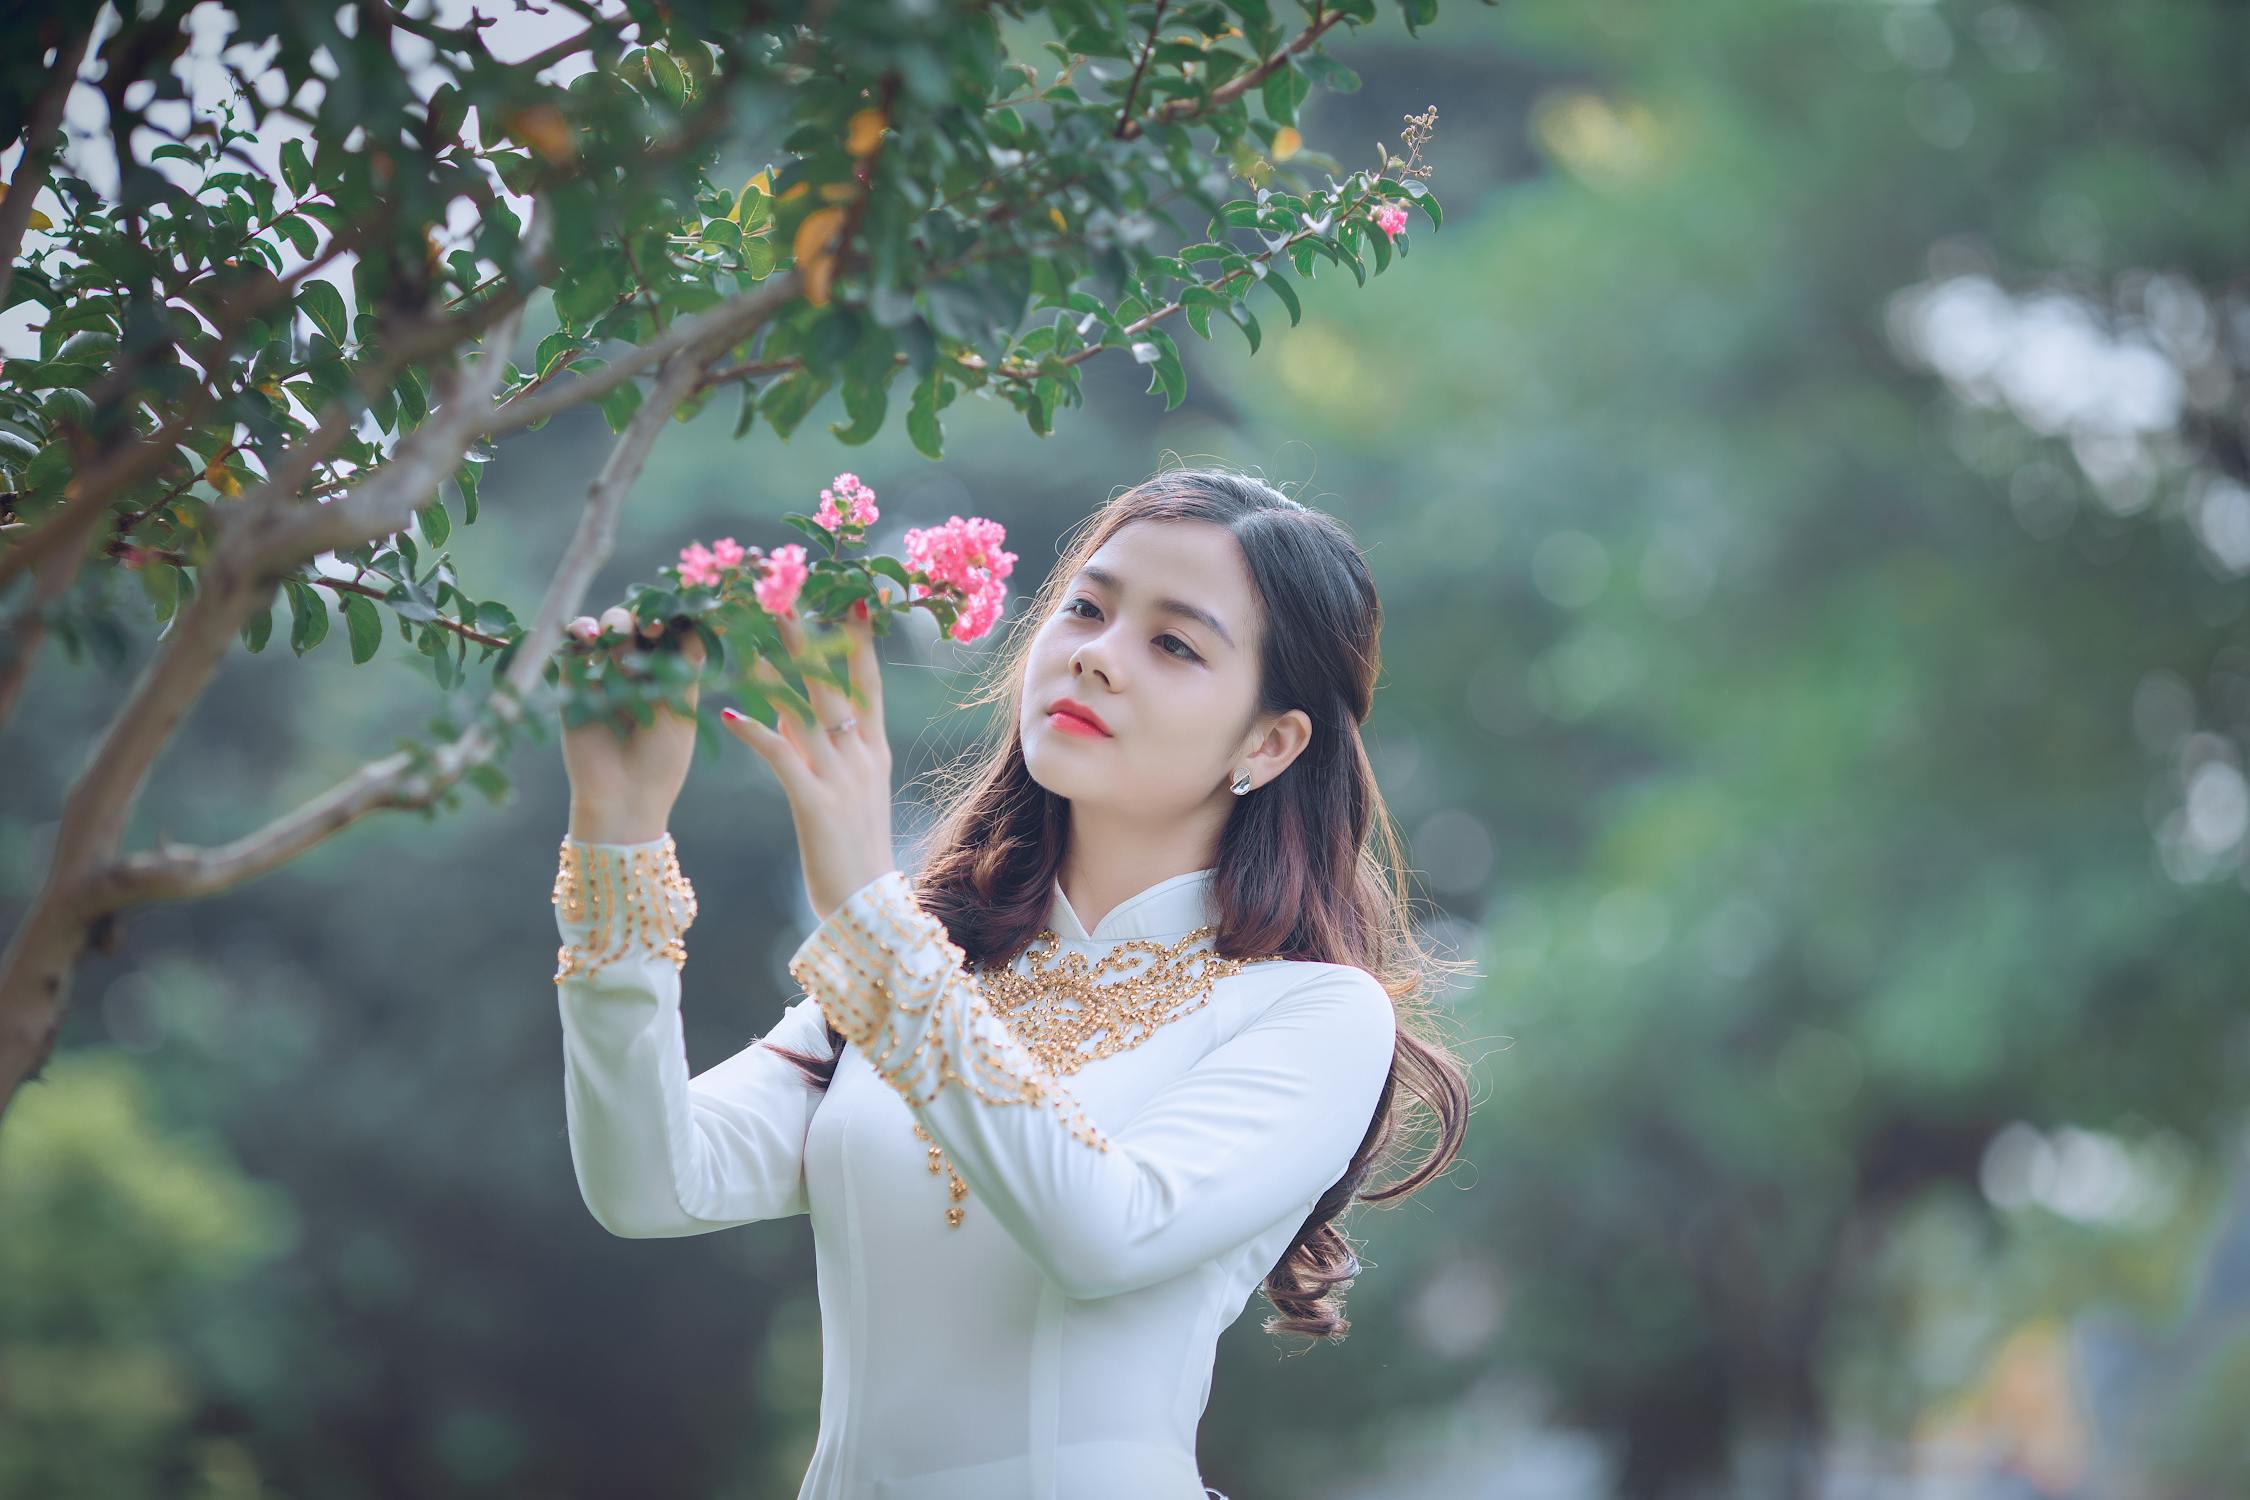 Korean Girl Photo by Tuấn Kiệt Jr. from Pexels: https://www.pexels.com/photo/woman-holding-pink-petaled-flower-1308881/